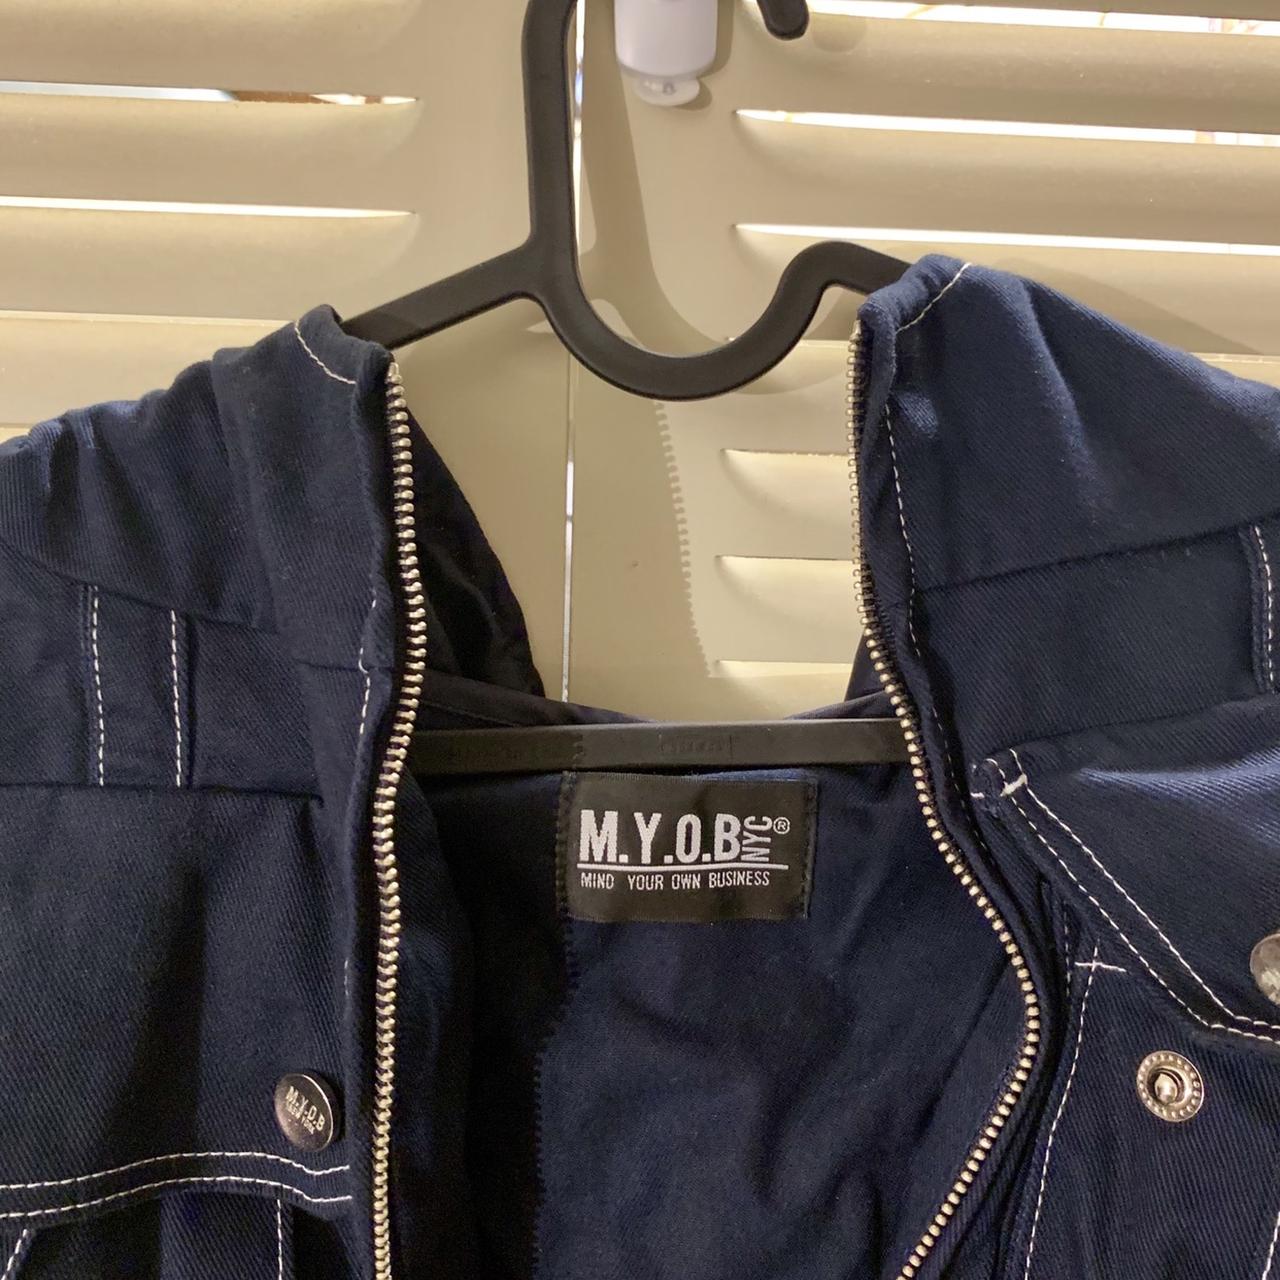 Product Image 2 - M.Y.O.B nyc denim jacket. MYOB.